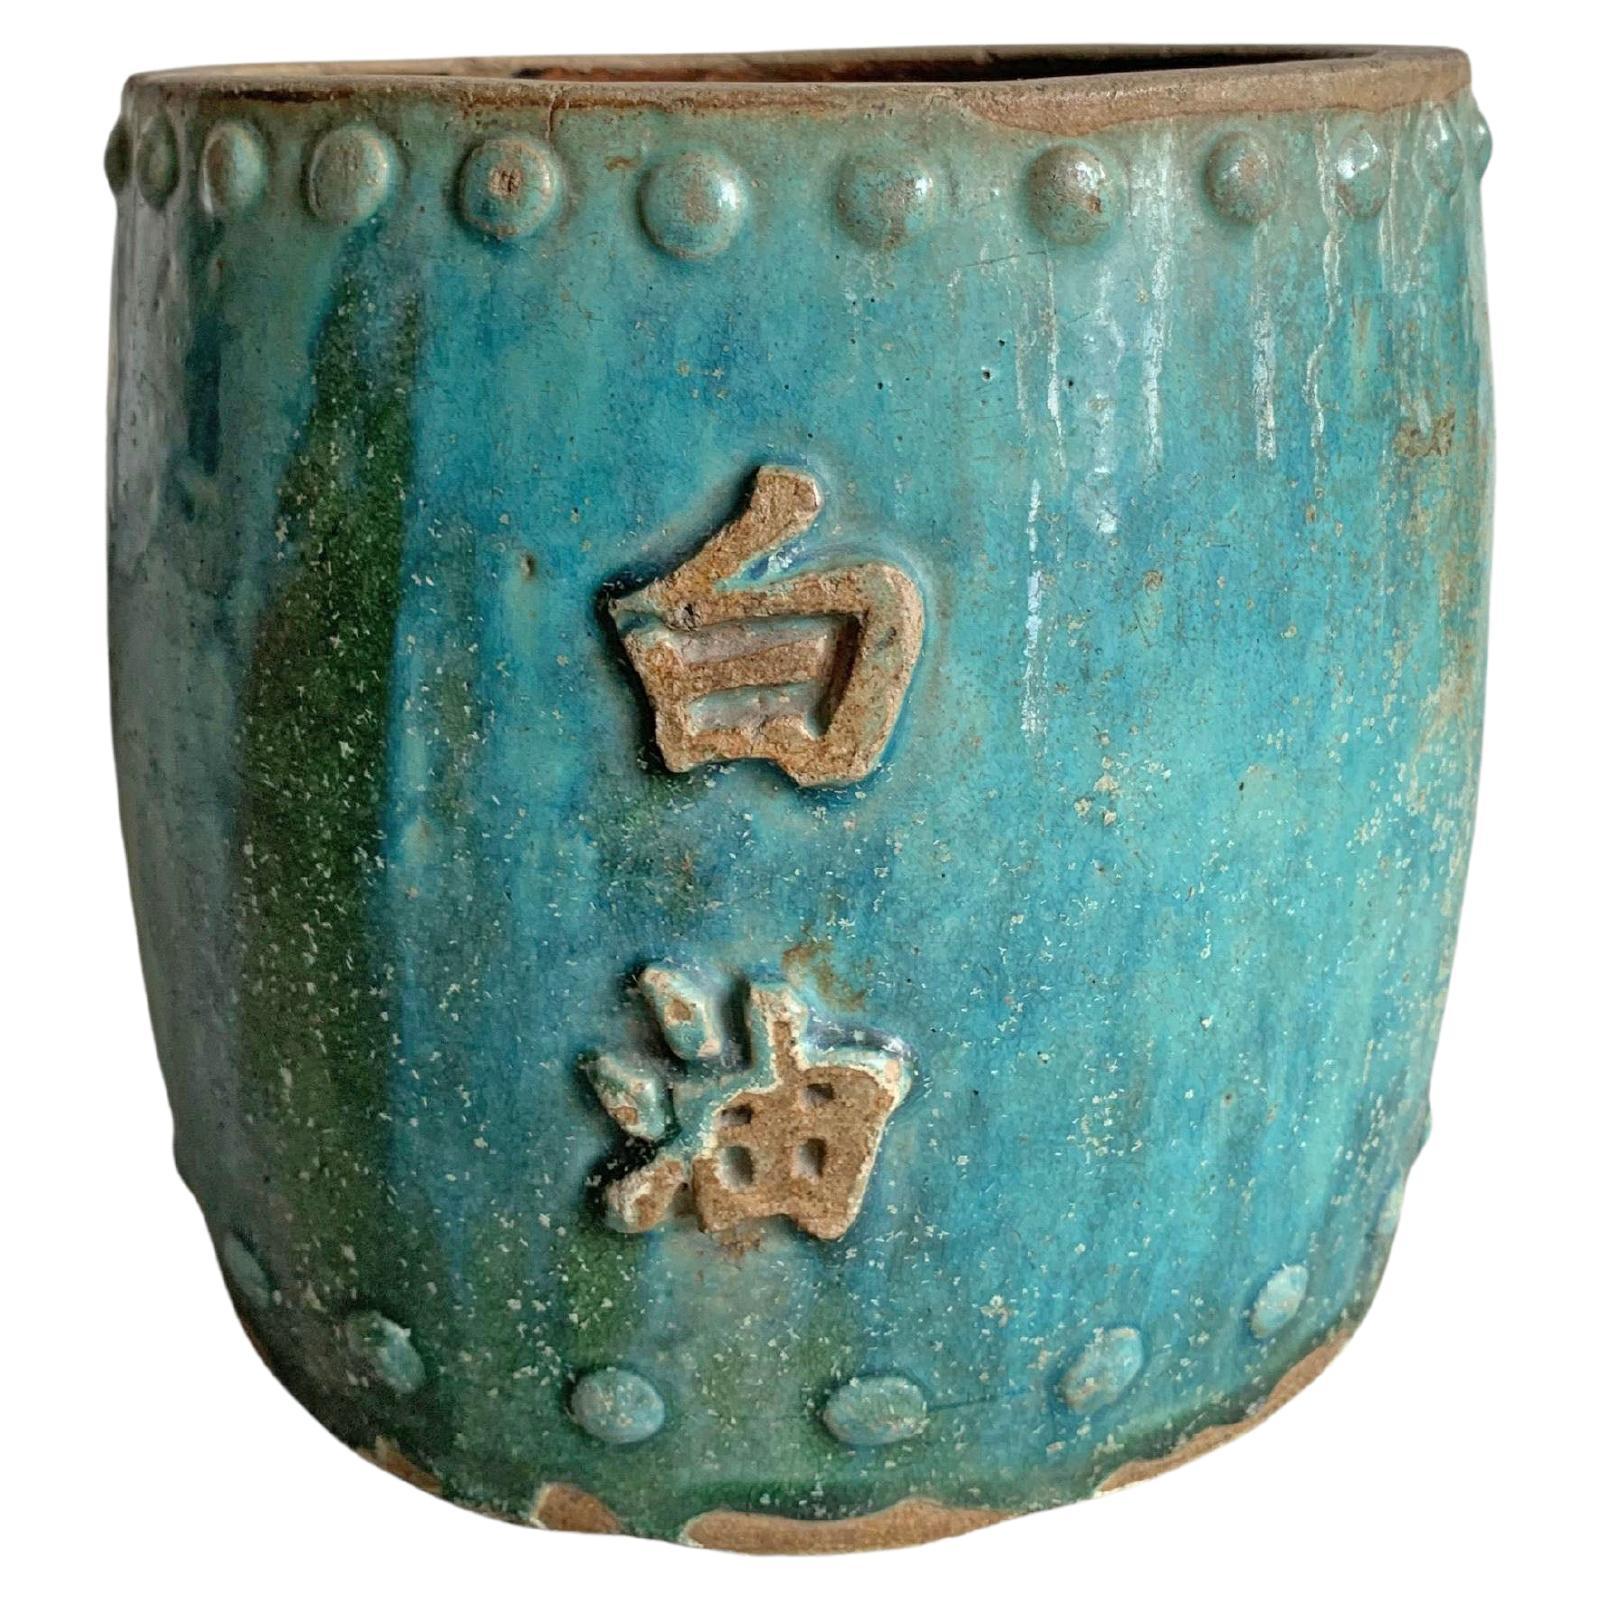 Chinese Green Glazed Ceramic "White Oil" Storage Jar / Planter, c. 1900 For Sale